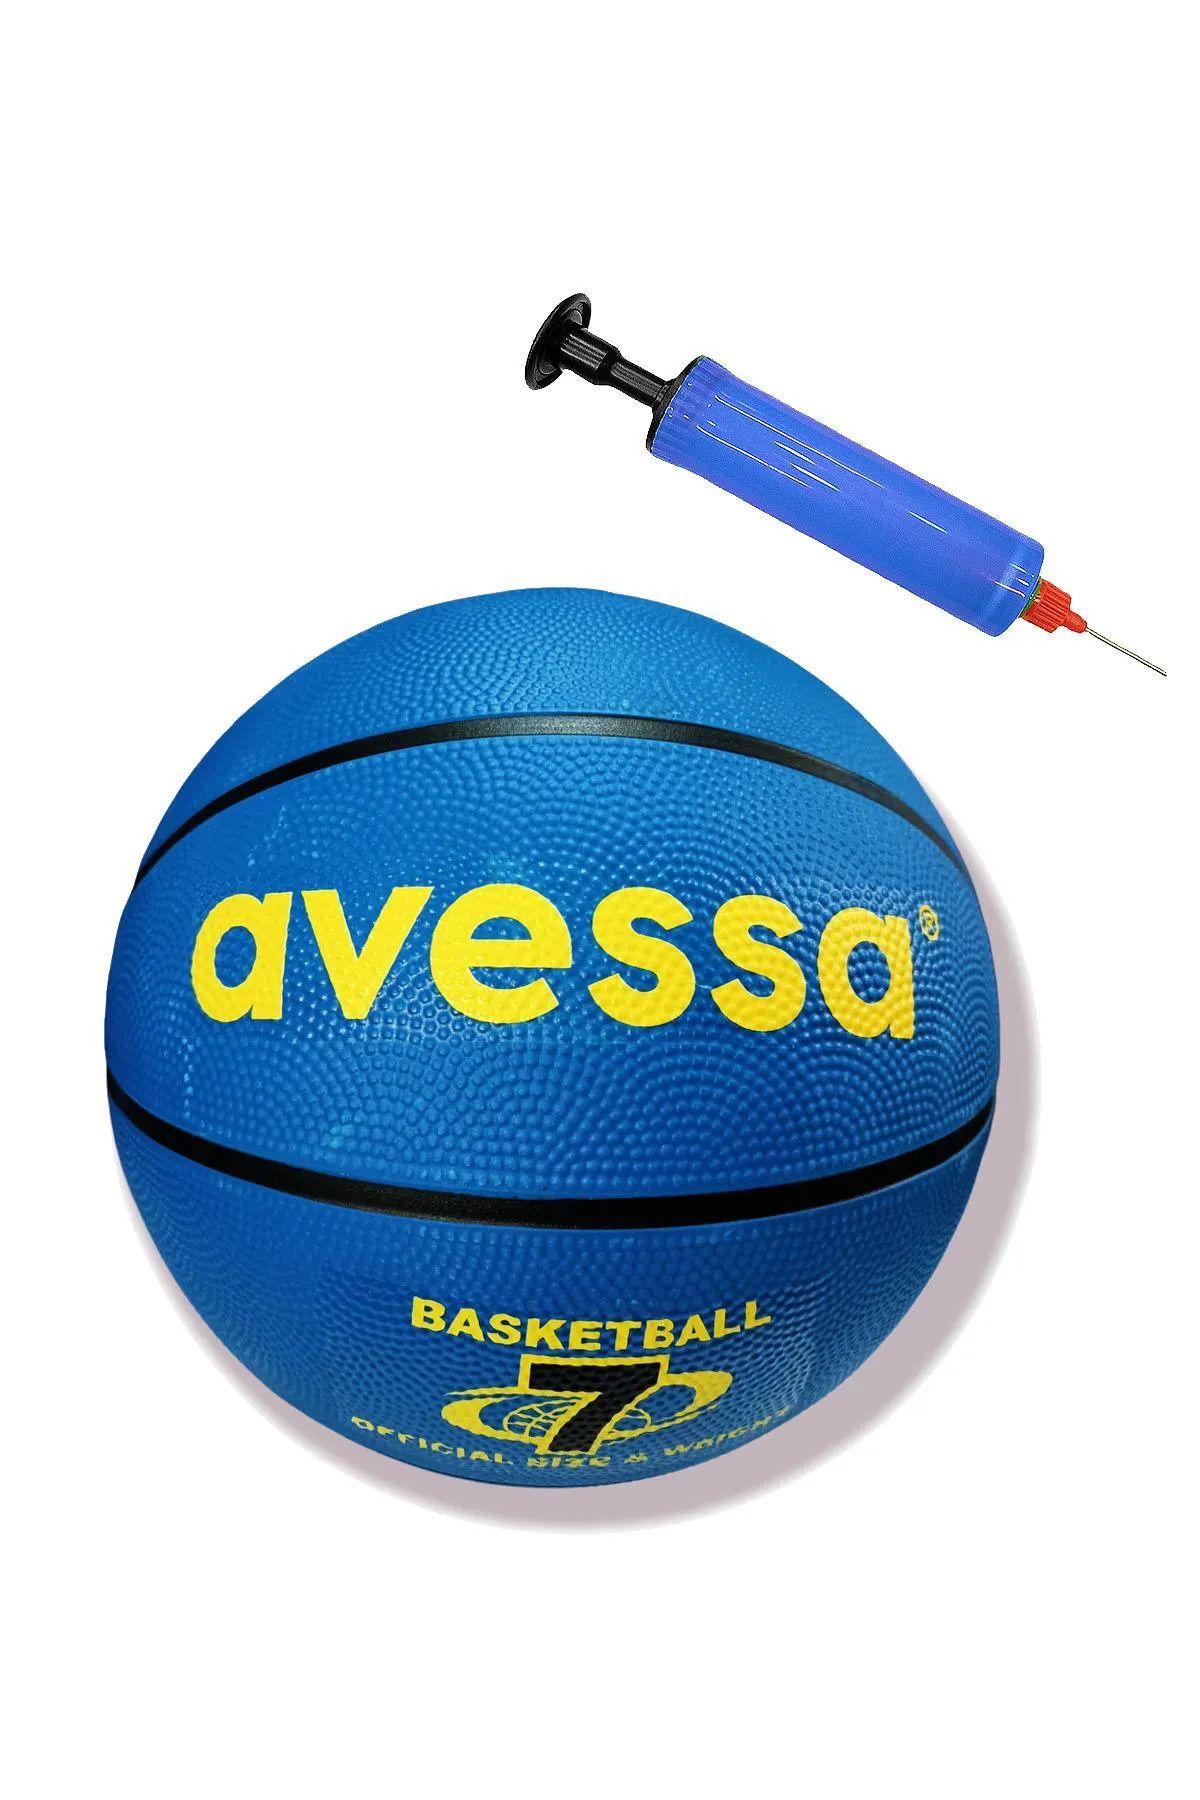 TOCSPORTS Mavi Basketbol Topu - No 7 - 520-550 Gram - Pompa Dahil